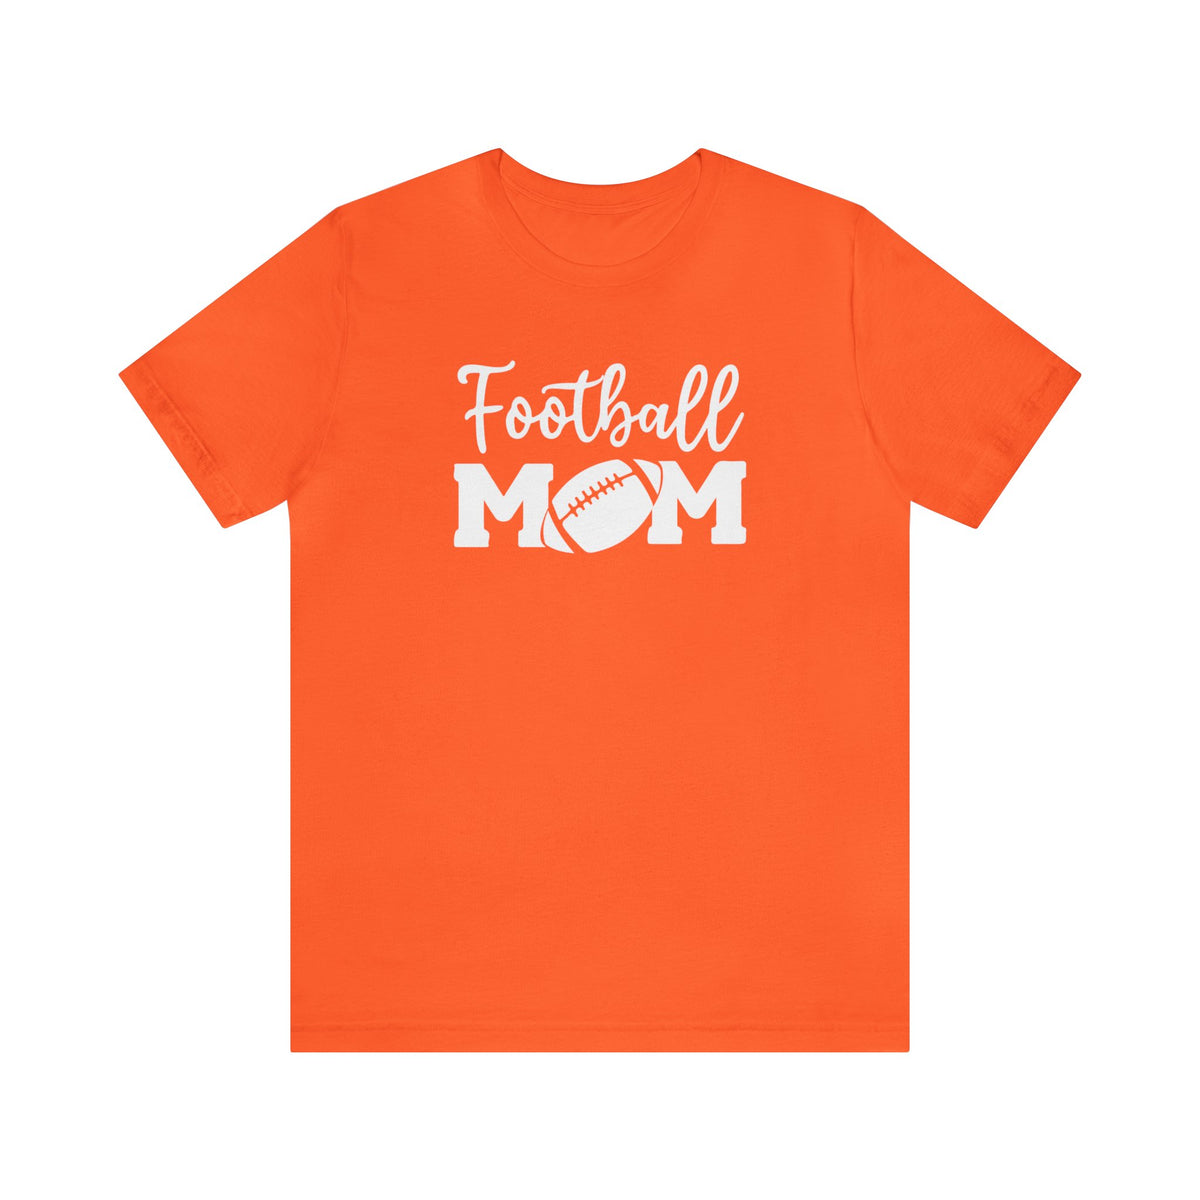 Football Mom Shirt | Football Mom Gift